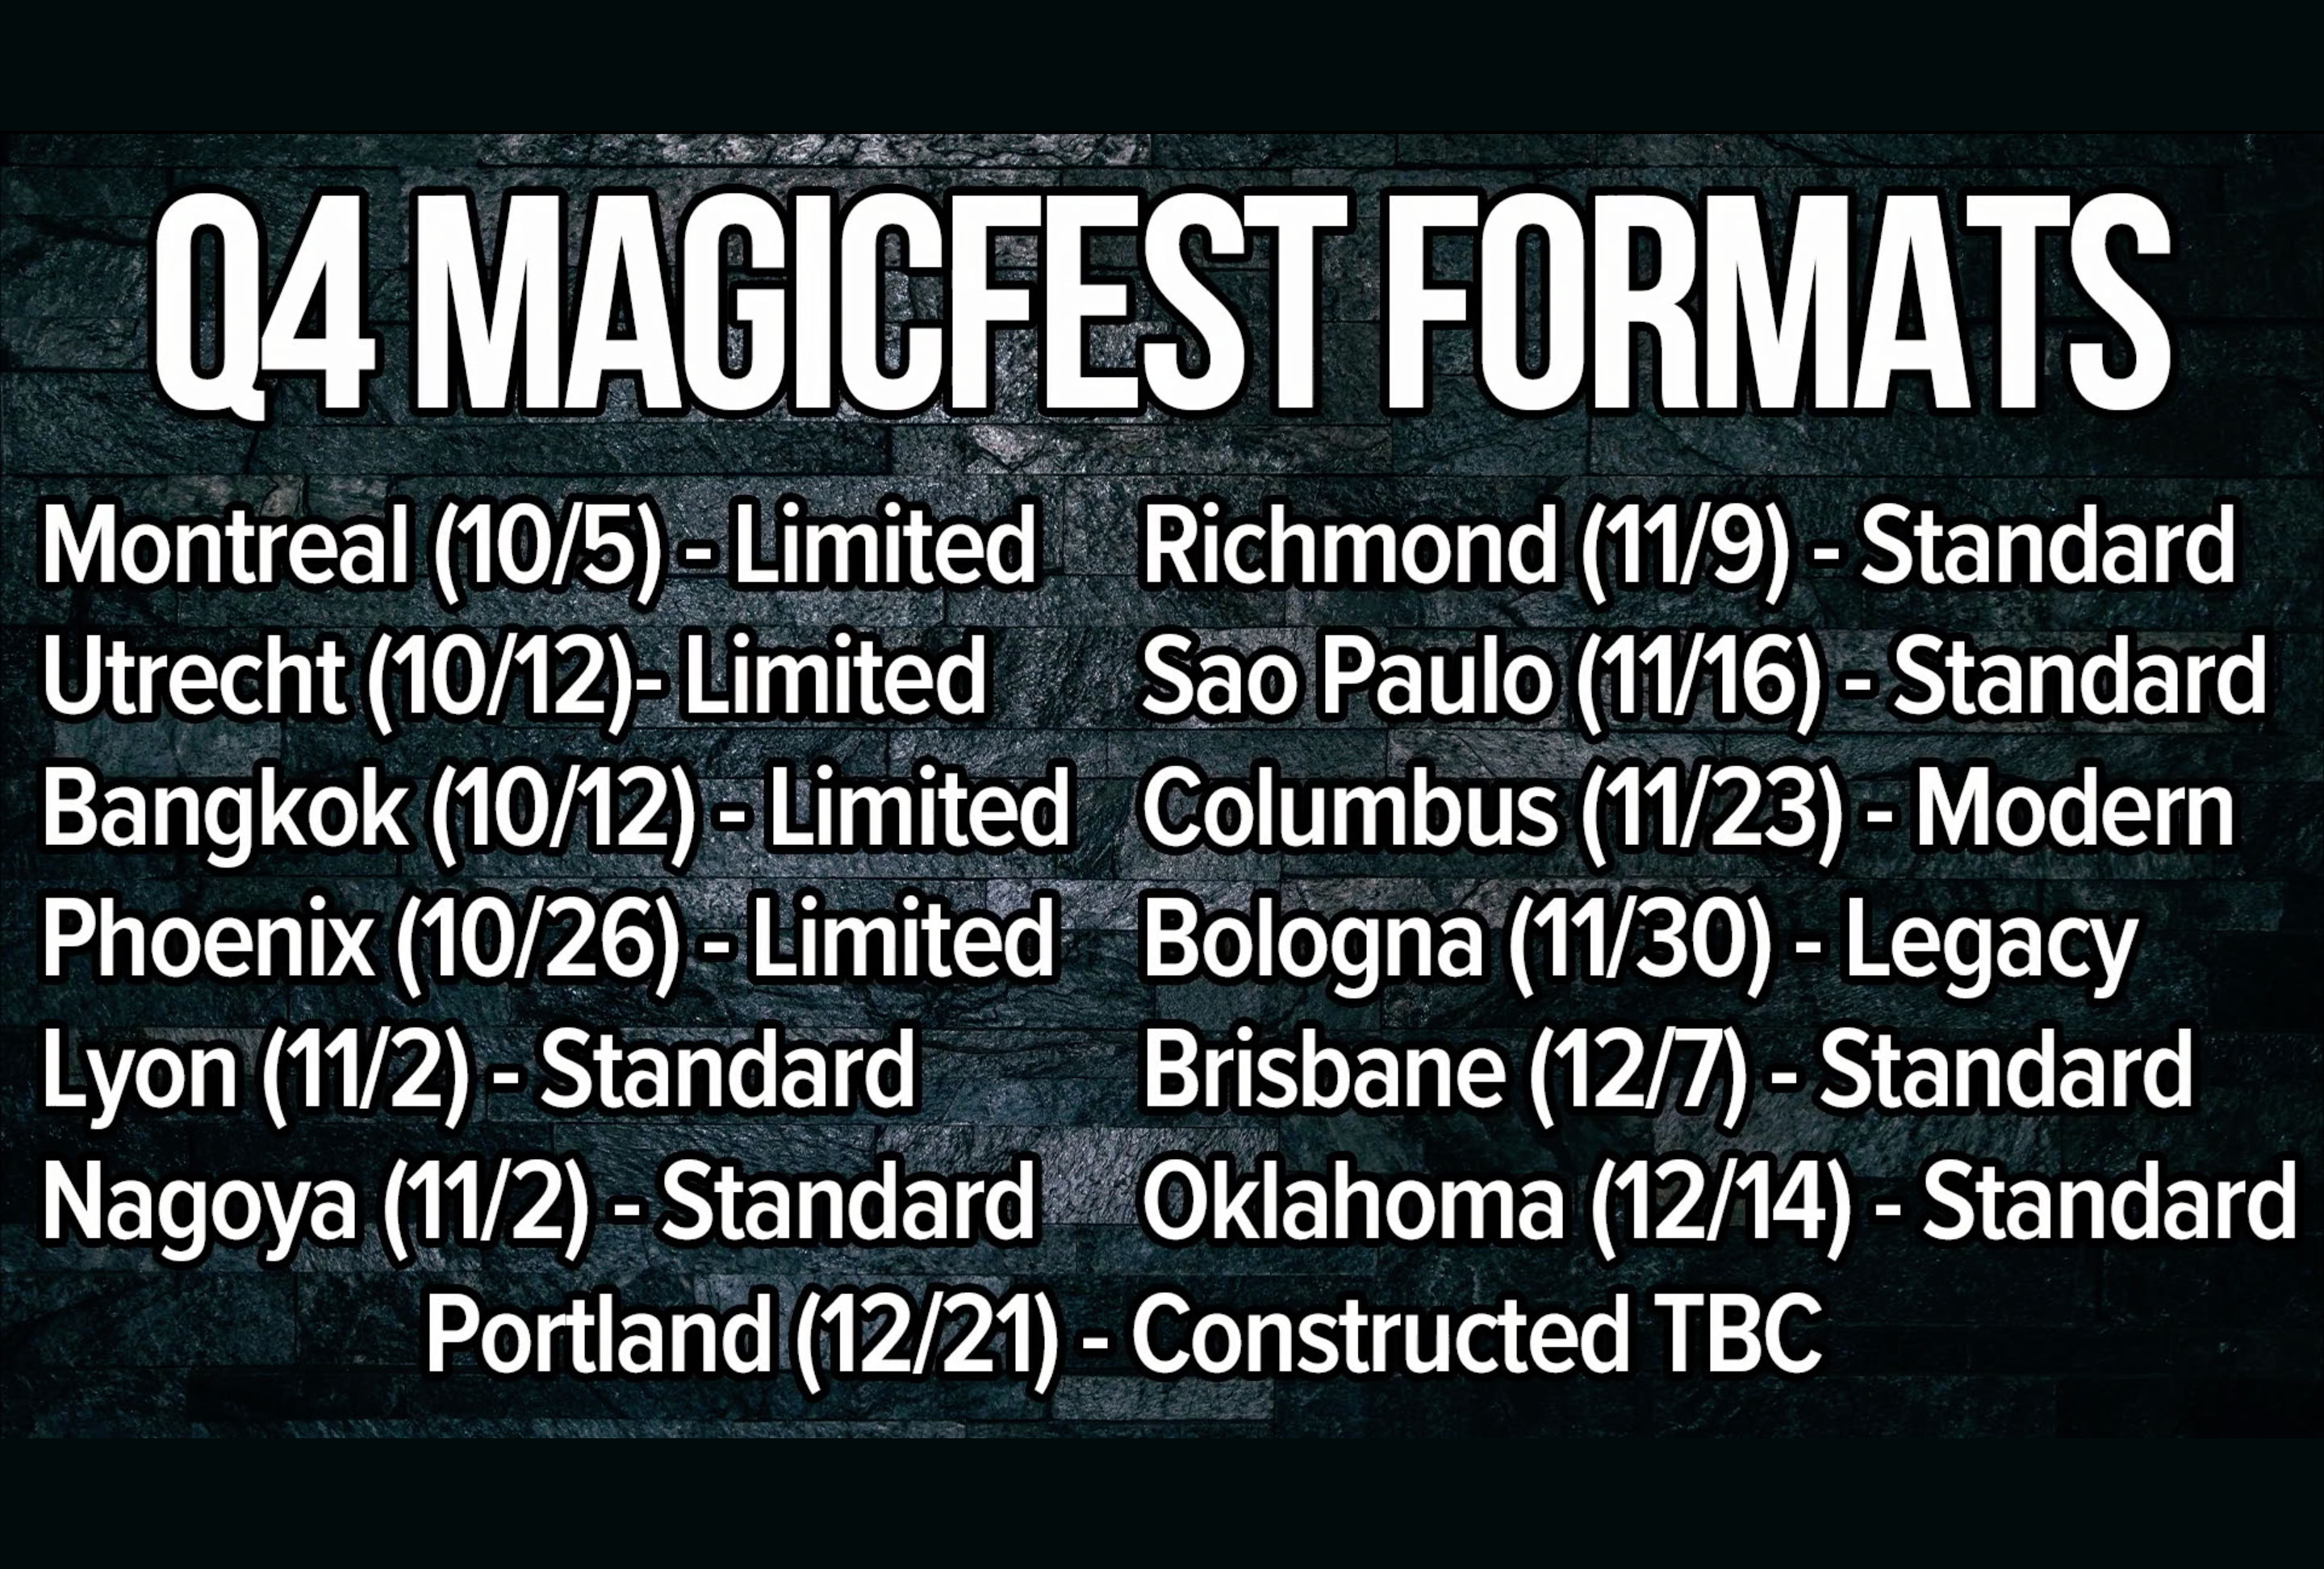 Formats for Magic Grand Prix in Q4 2019 Announced